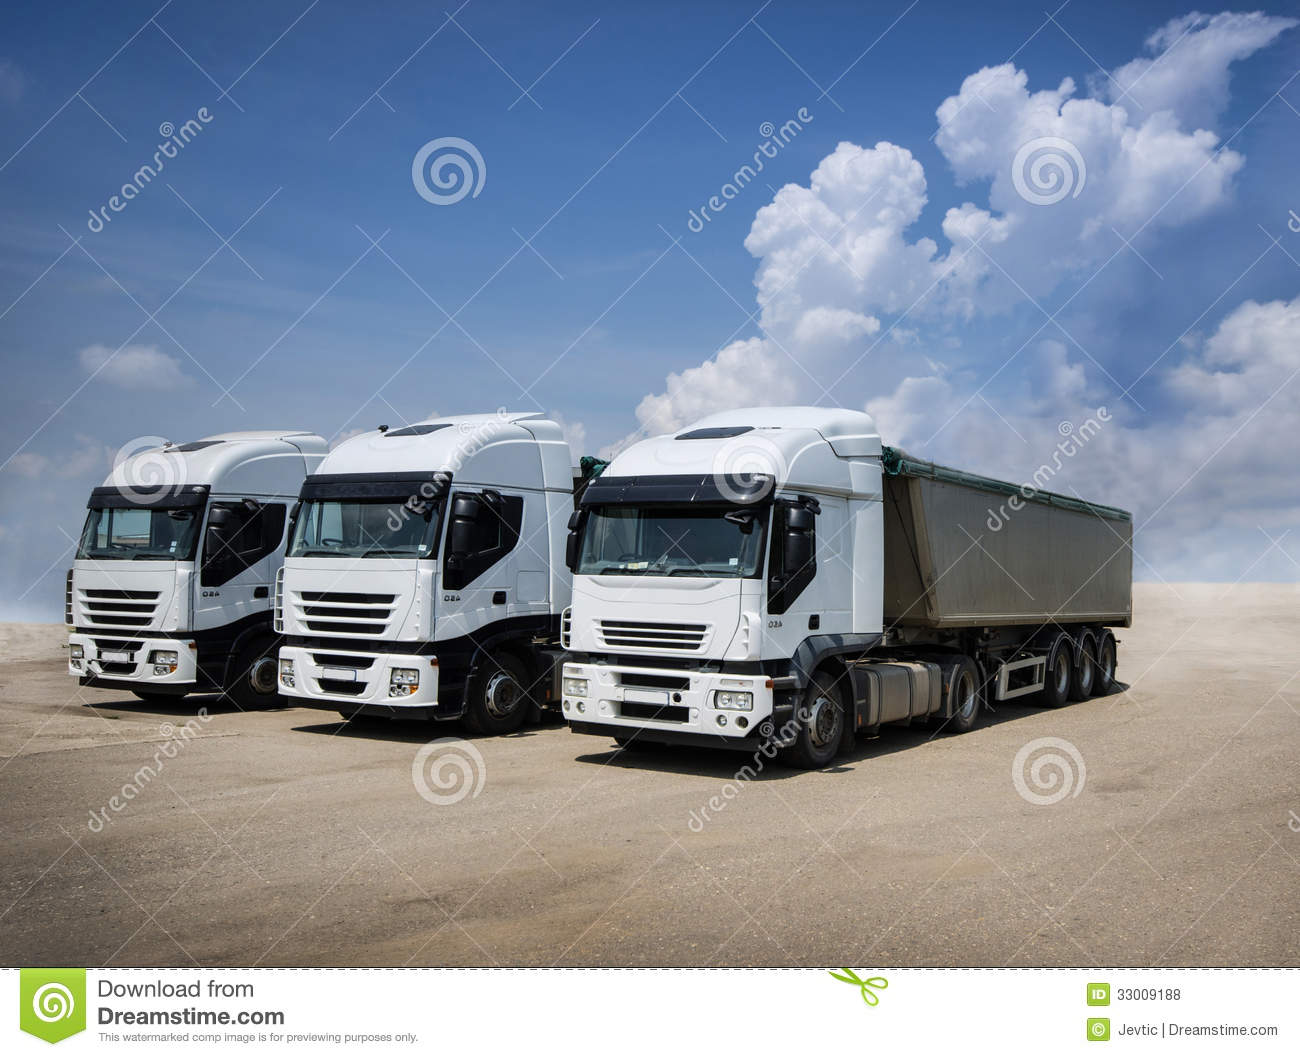 White Trucks Parked Royalty Free Stock Photos   Image  33009188